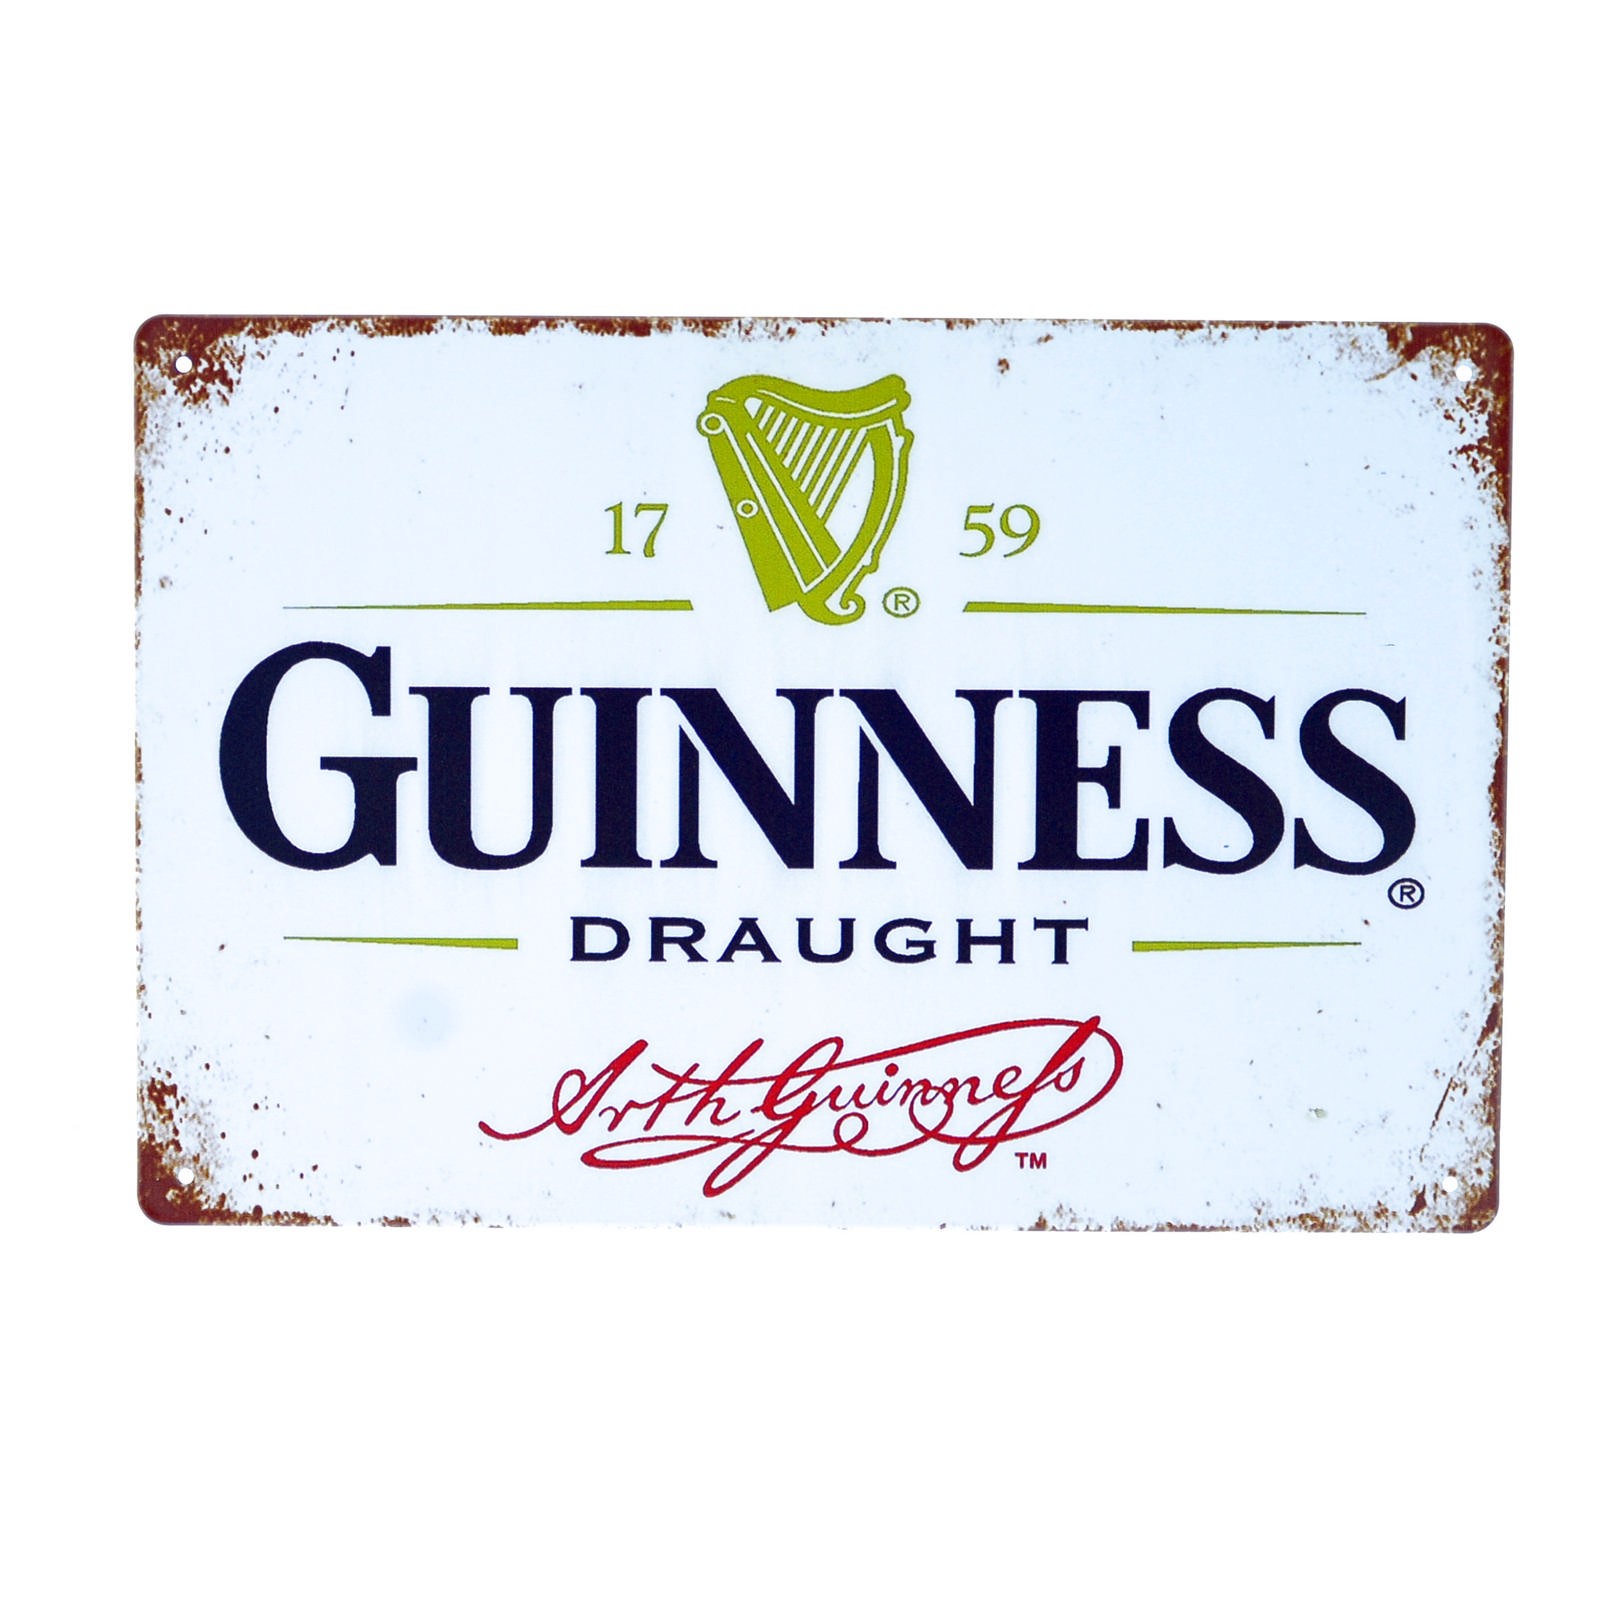 Cartel Metálico de Guinness blanco